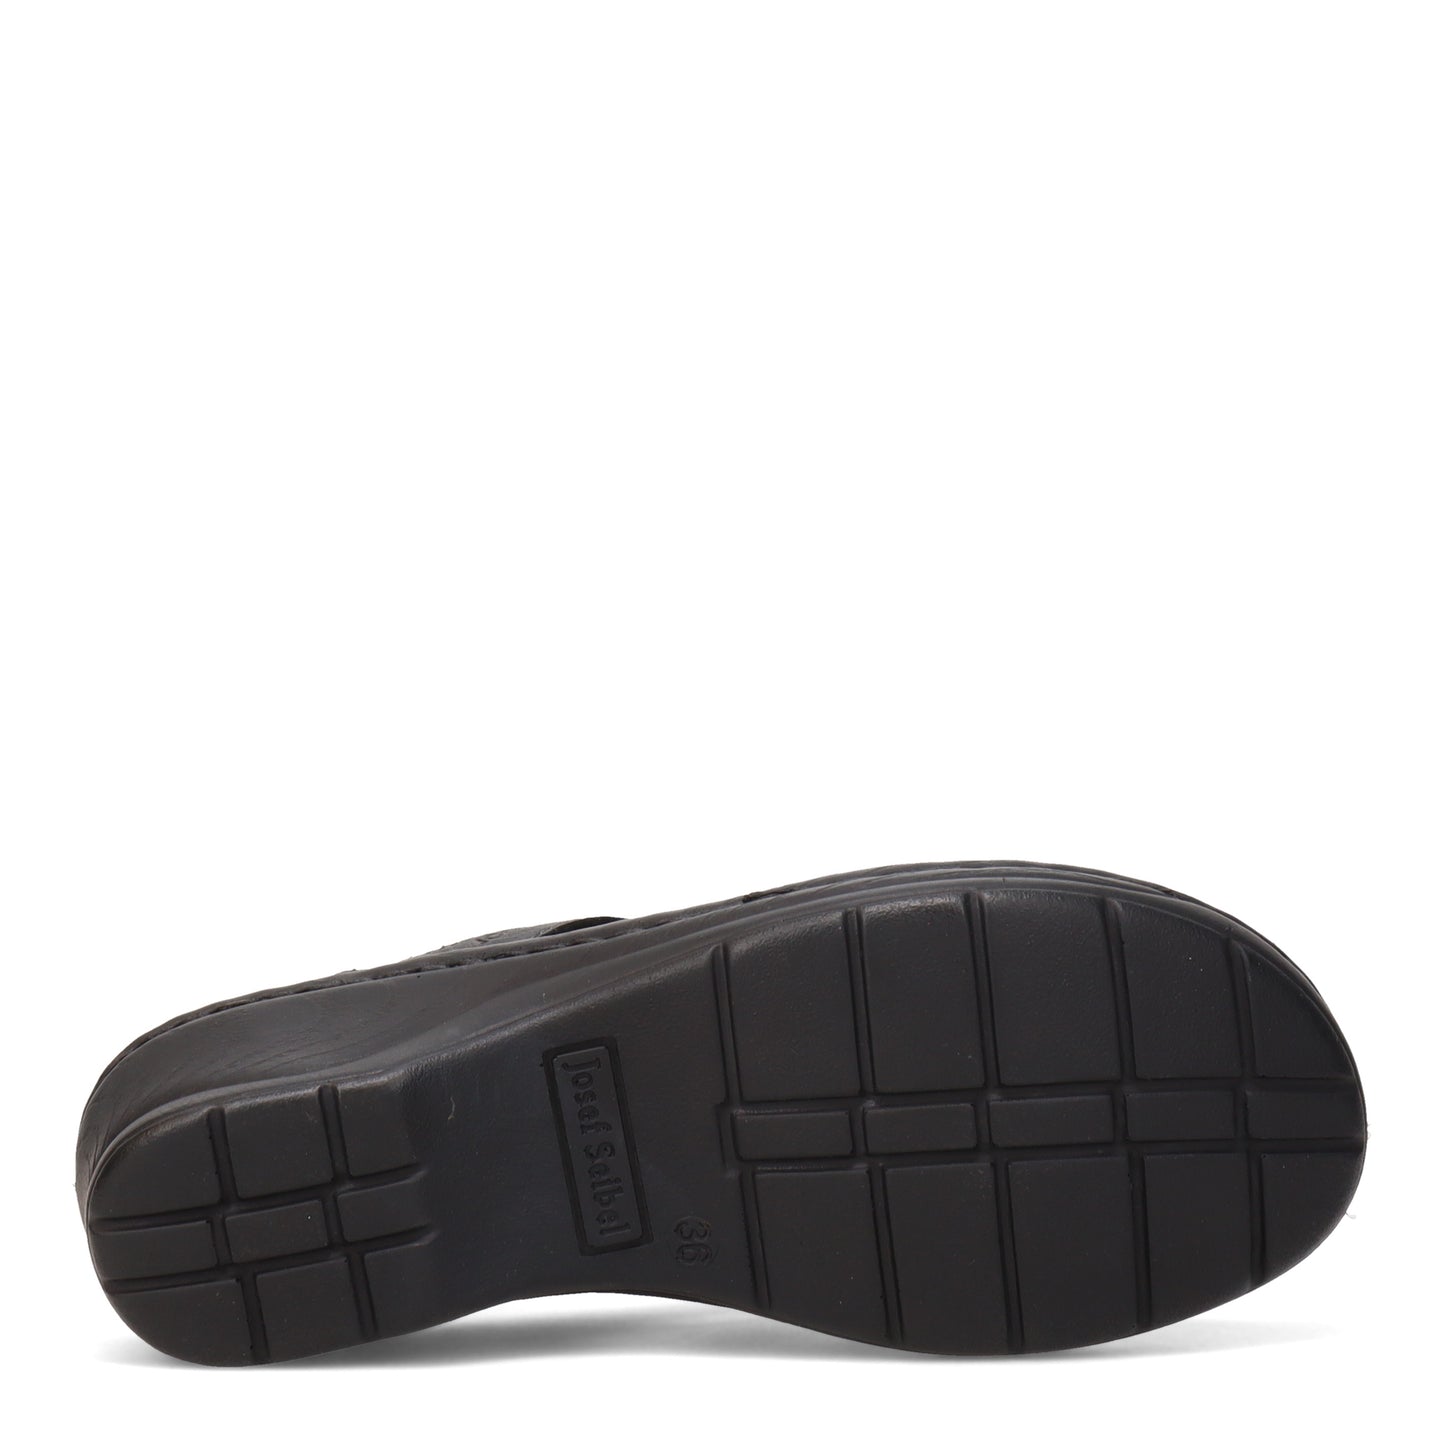 Peltz Shoes  Women's Josef Seibel Catalonia 01 Sandal BLACK 56366-95100